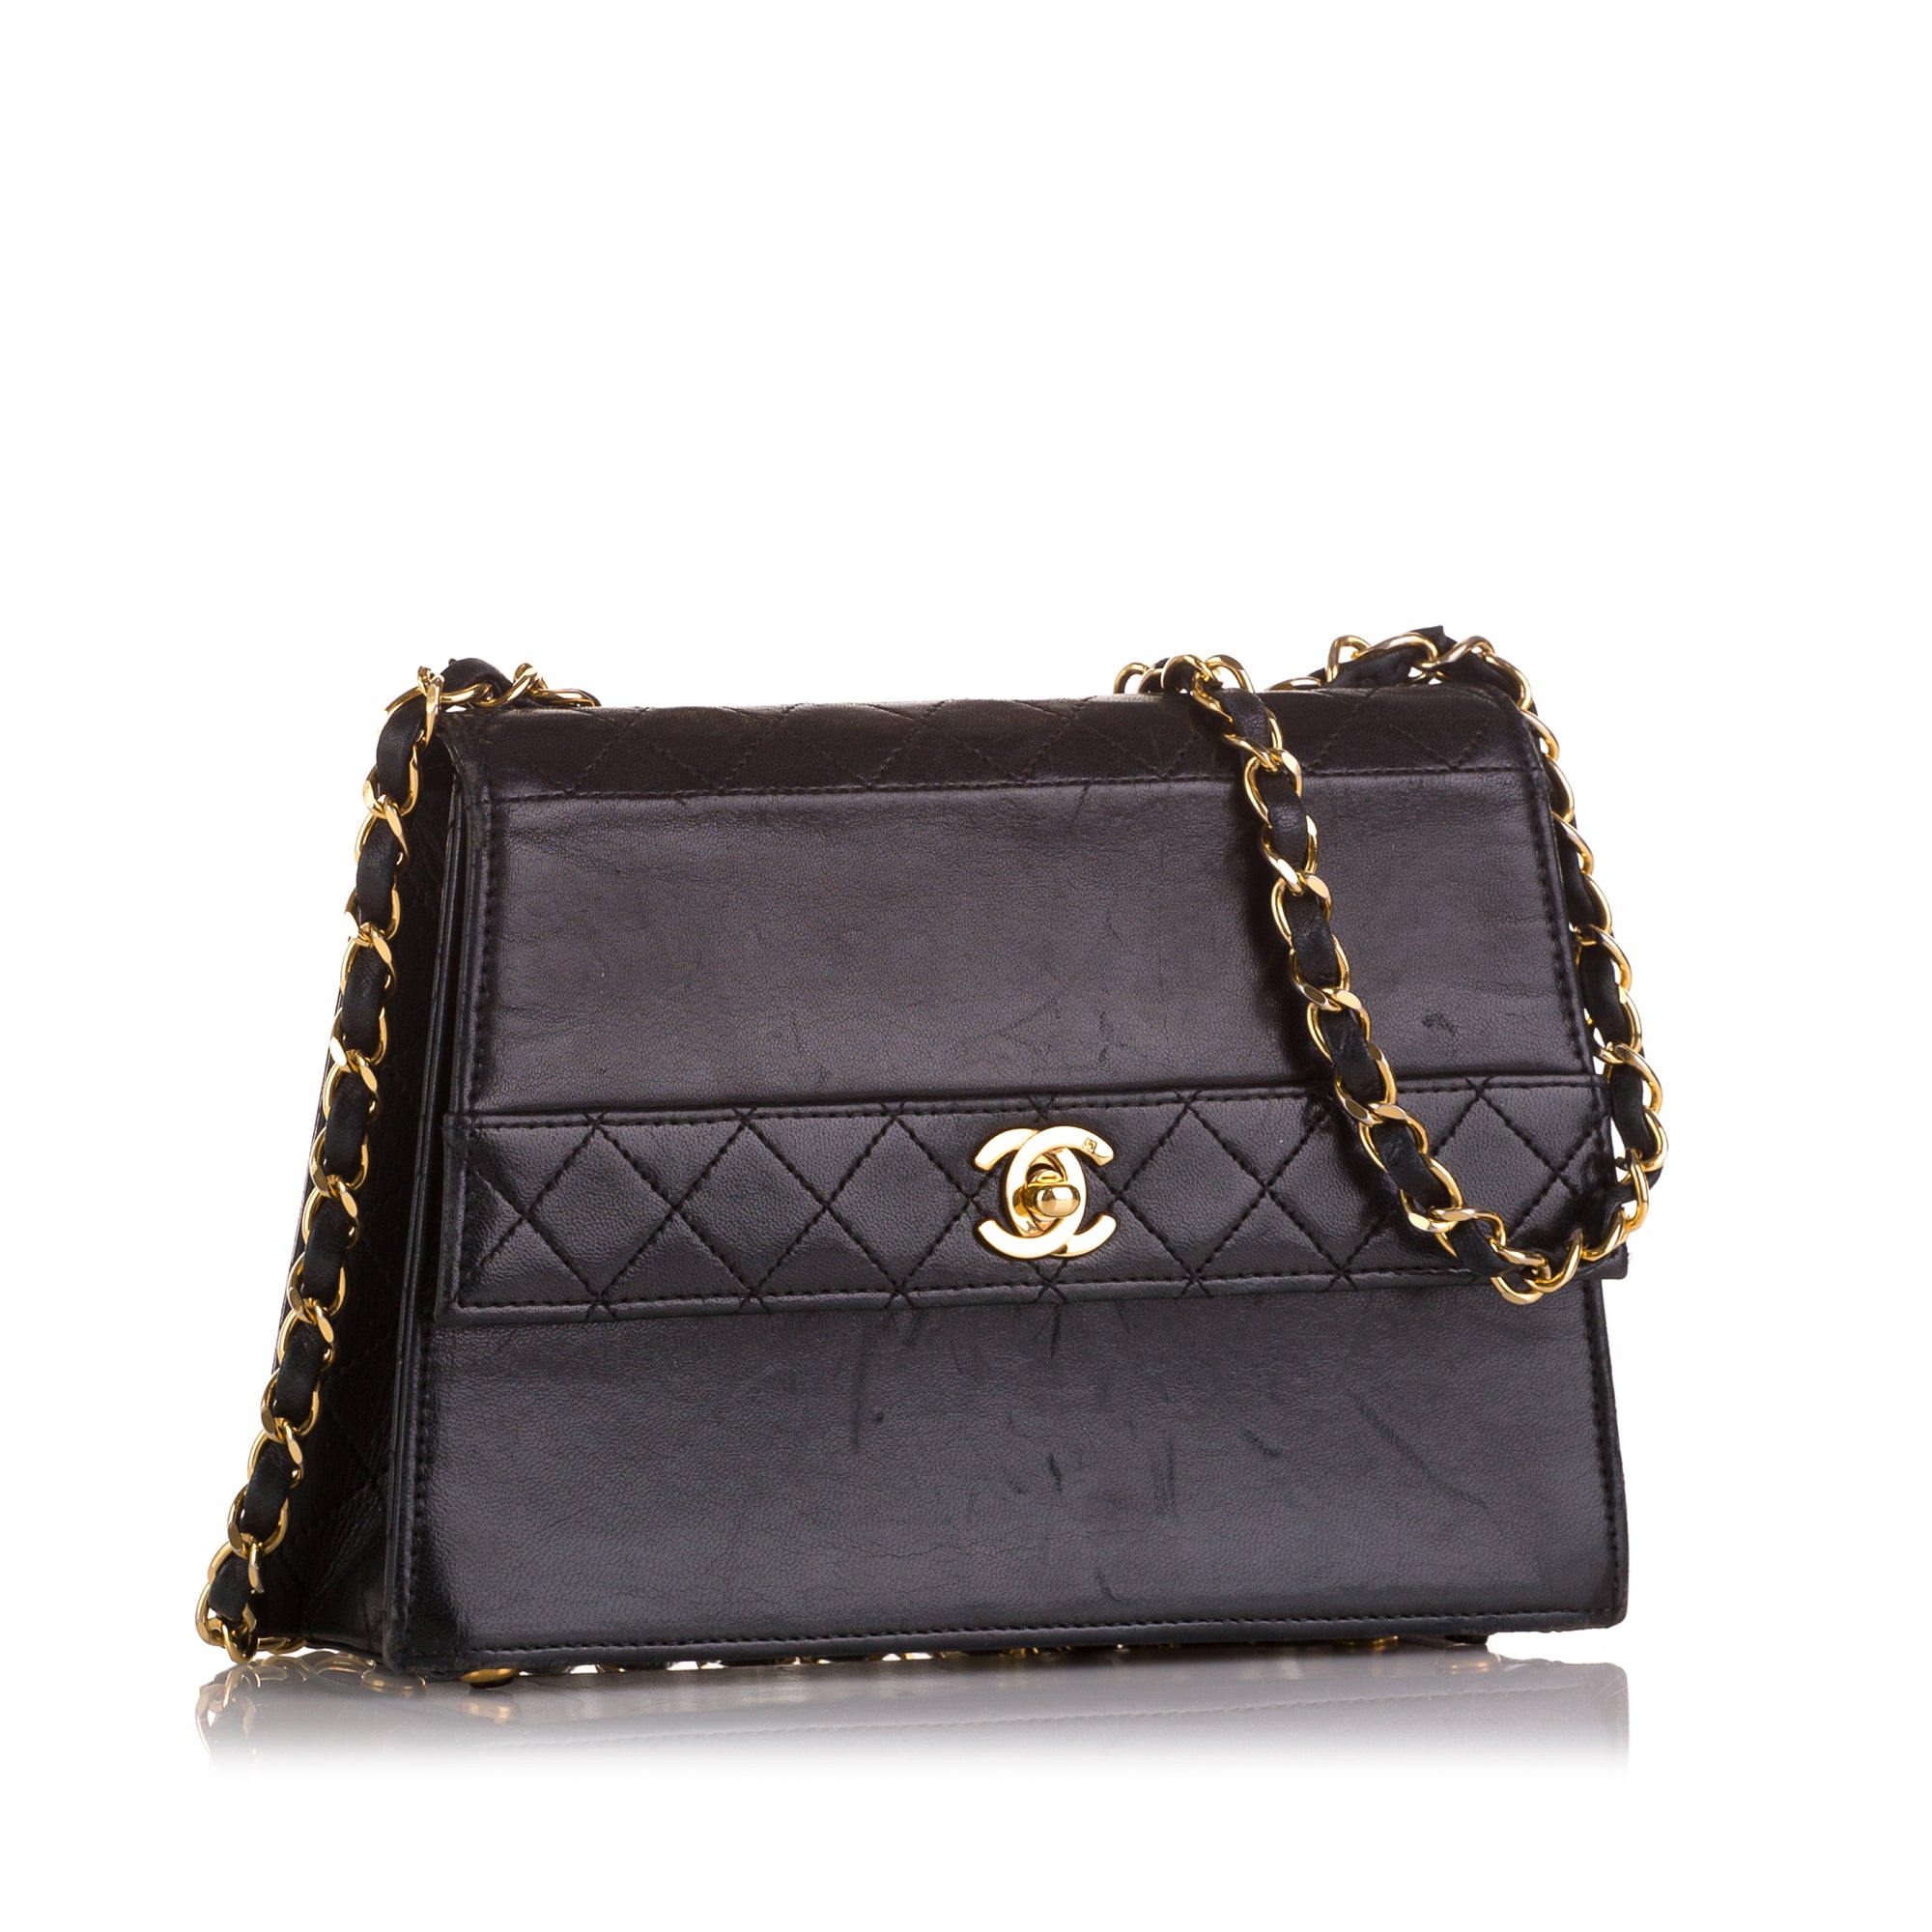 Black glitter Chanel Timeless CC Lambskin Leather Flap Bag